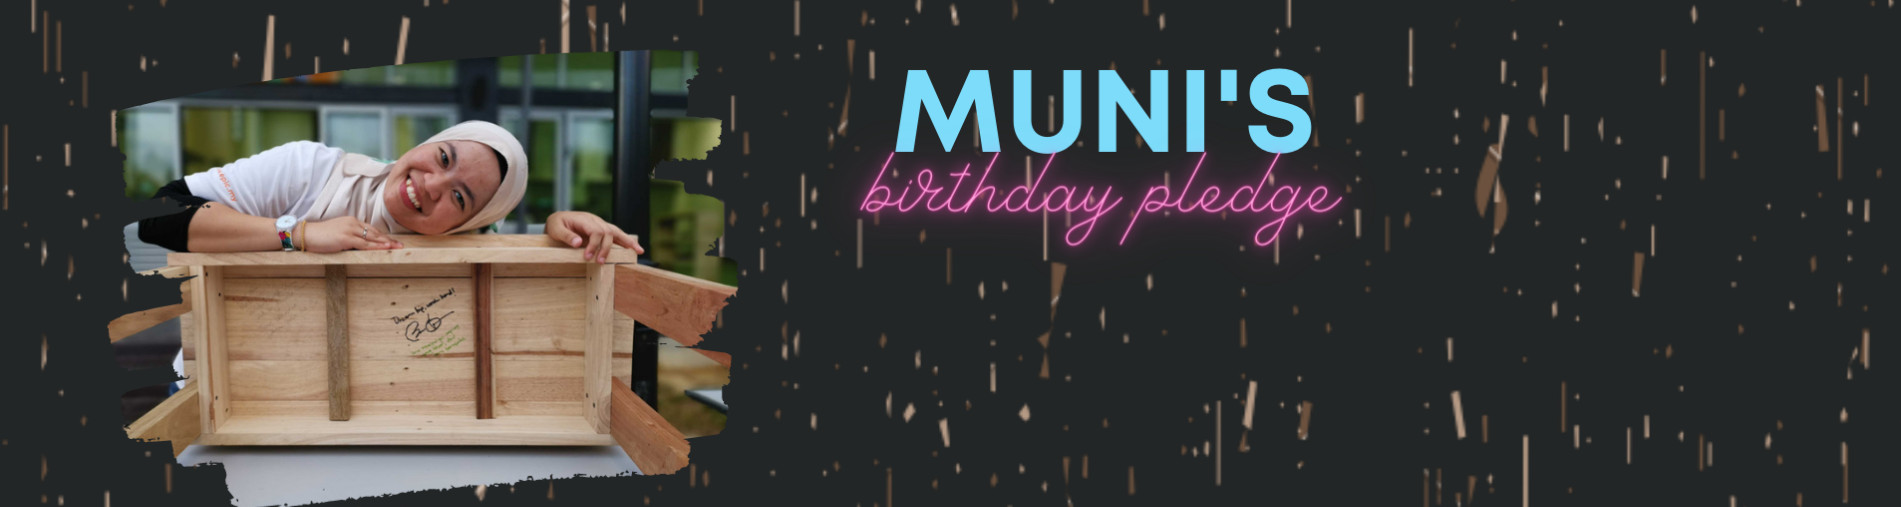 Muni's 2020 birthday pledge!